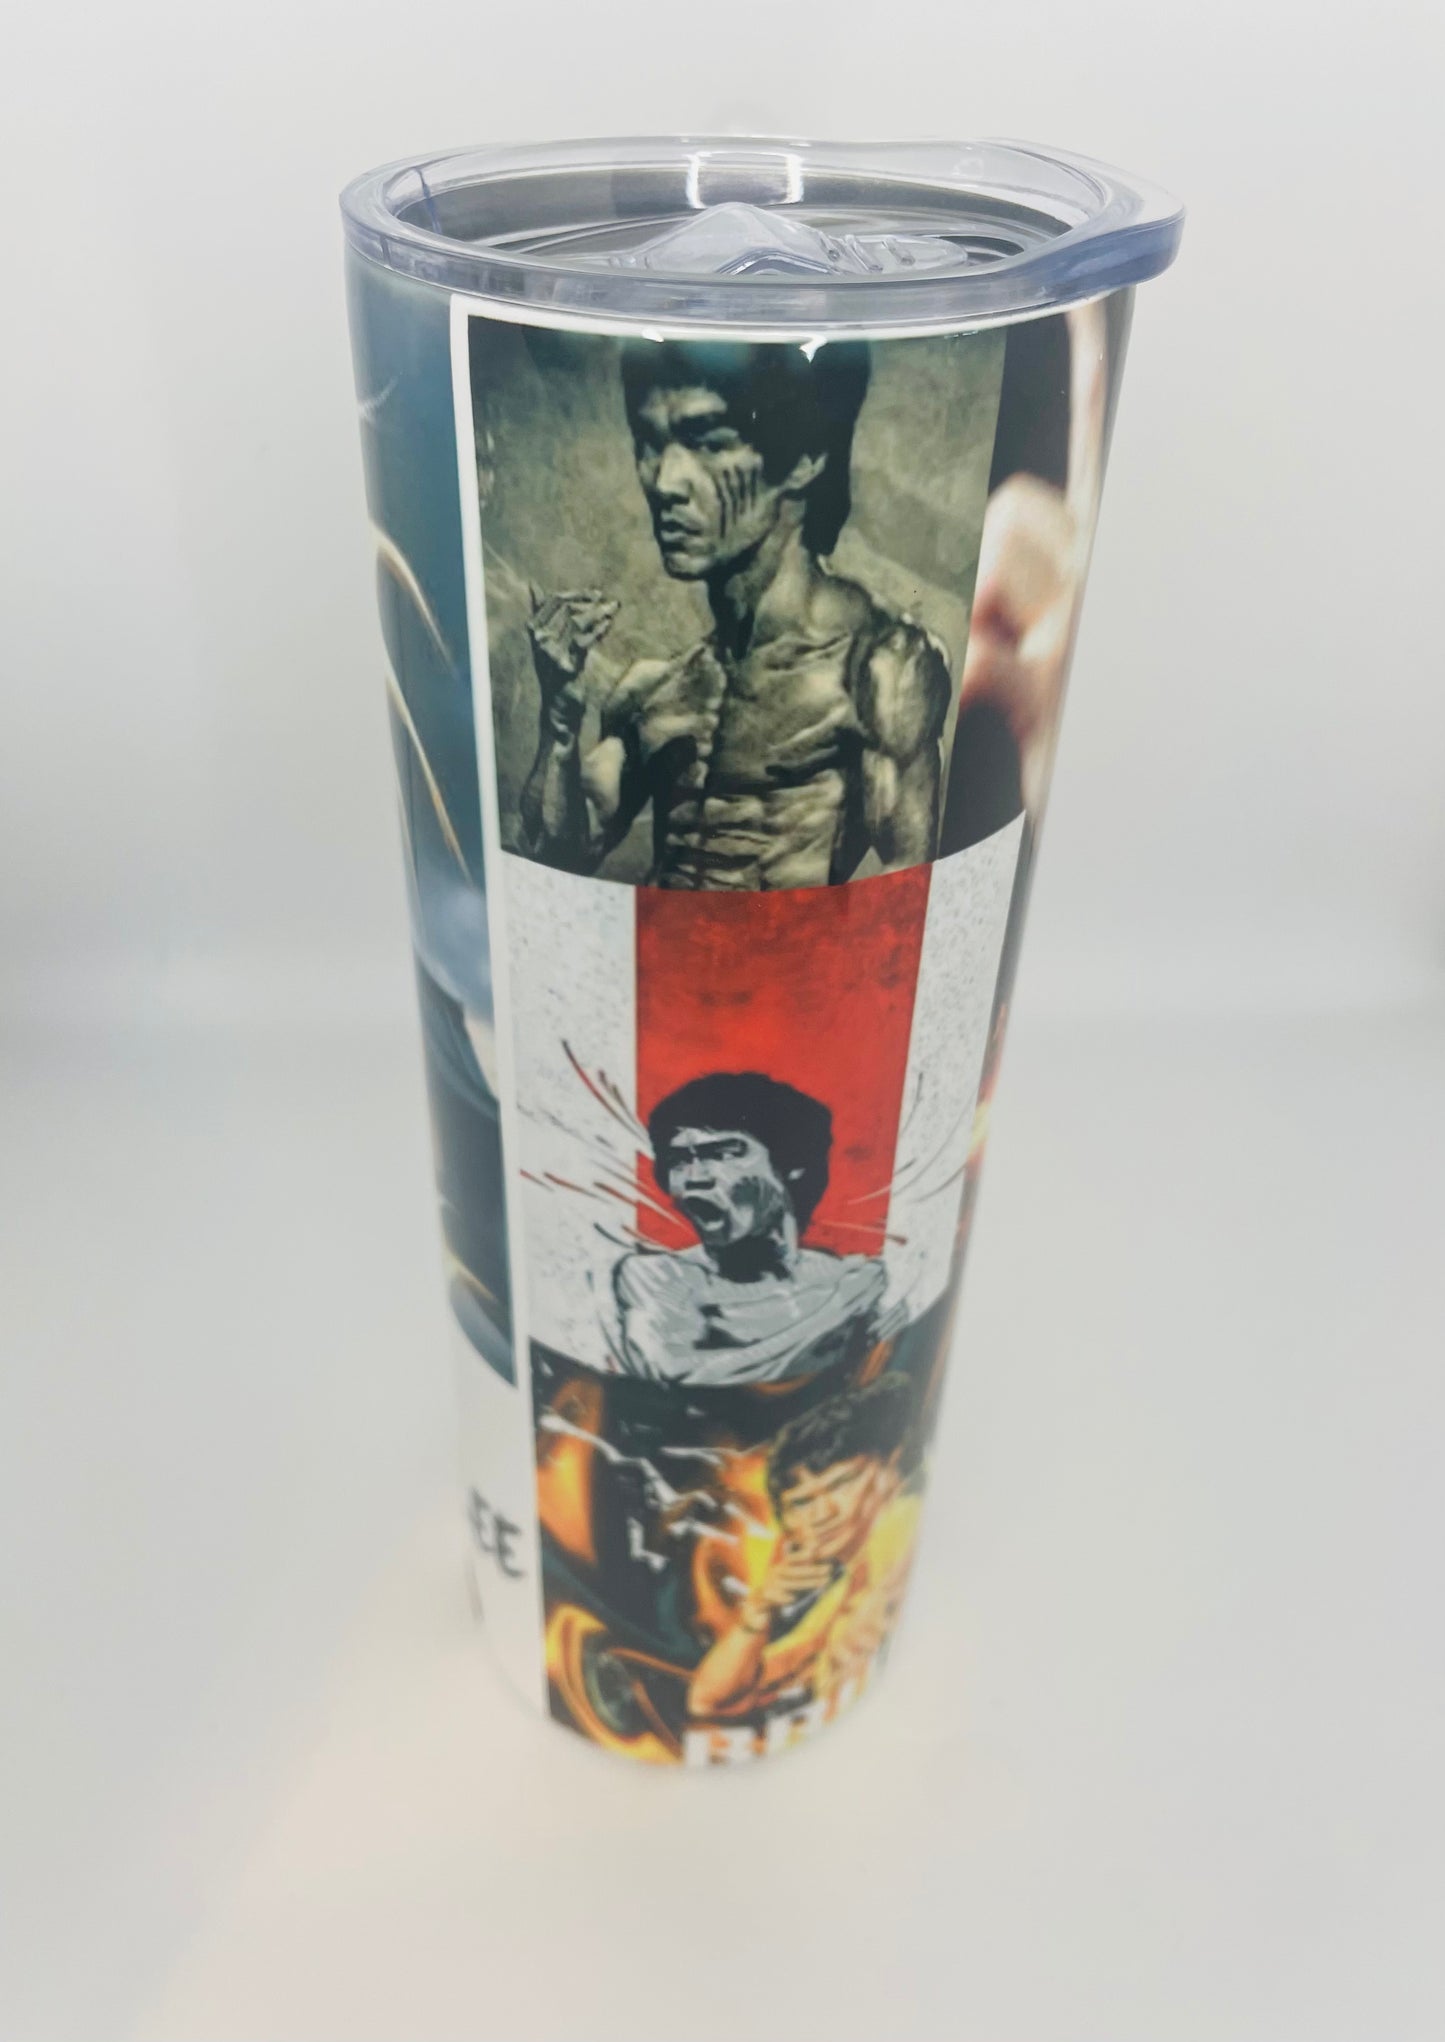 Customized Tumblers, Custom Made Cups, Personalized Tumblers, Personalized Cups, Bruce Lee, Bruce Lee Customized Tumblers, Bruce Lee Cup, Coffee Cups, Tumblers